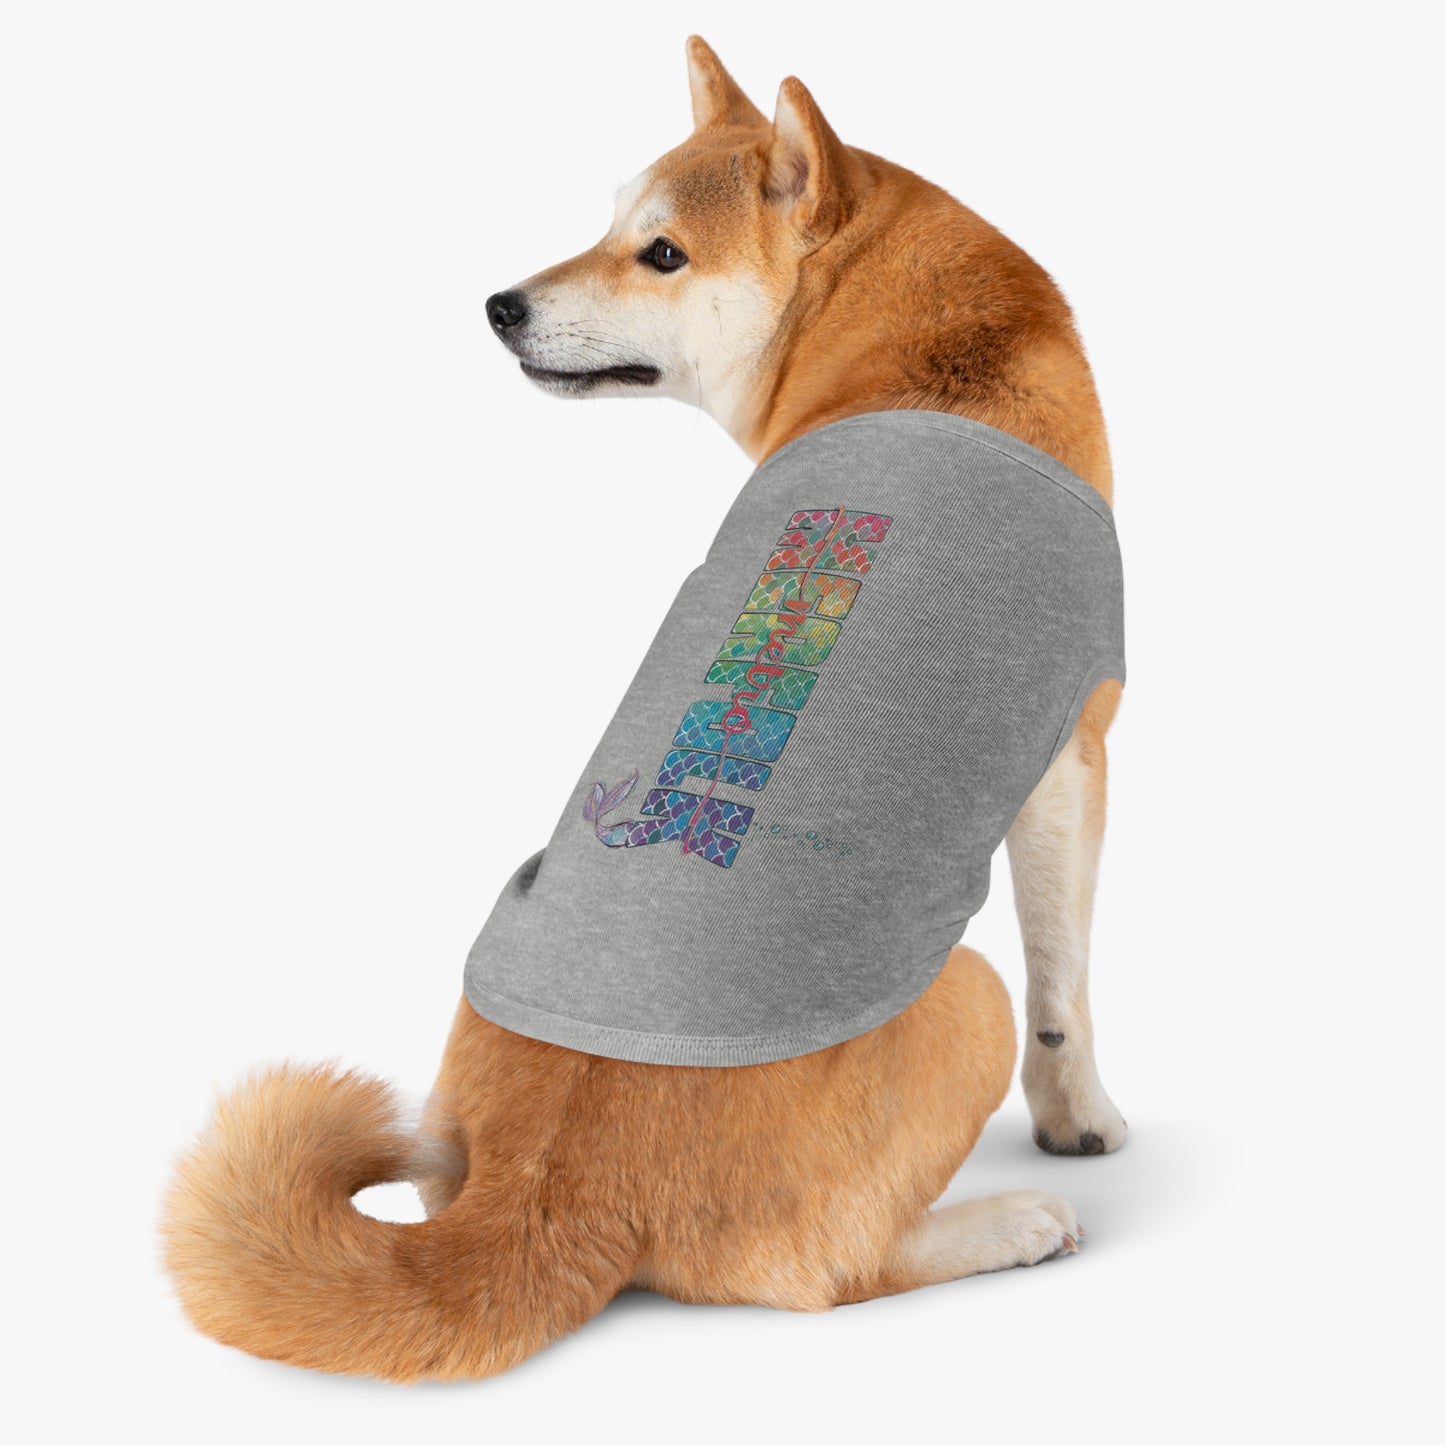 O-fish-al "Metro Merfolk" Pet Shirt